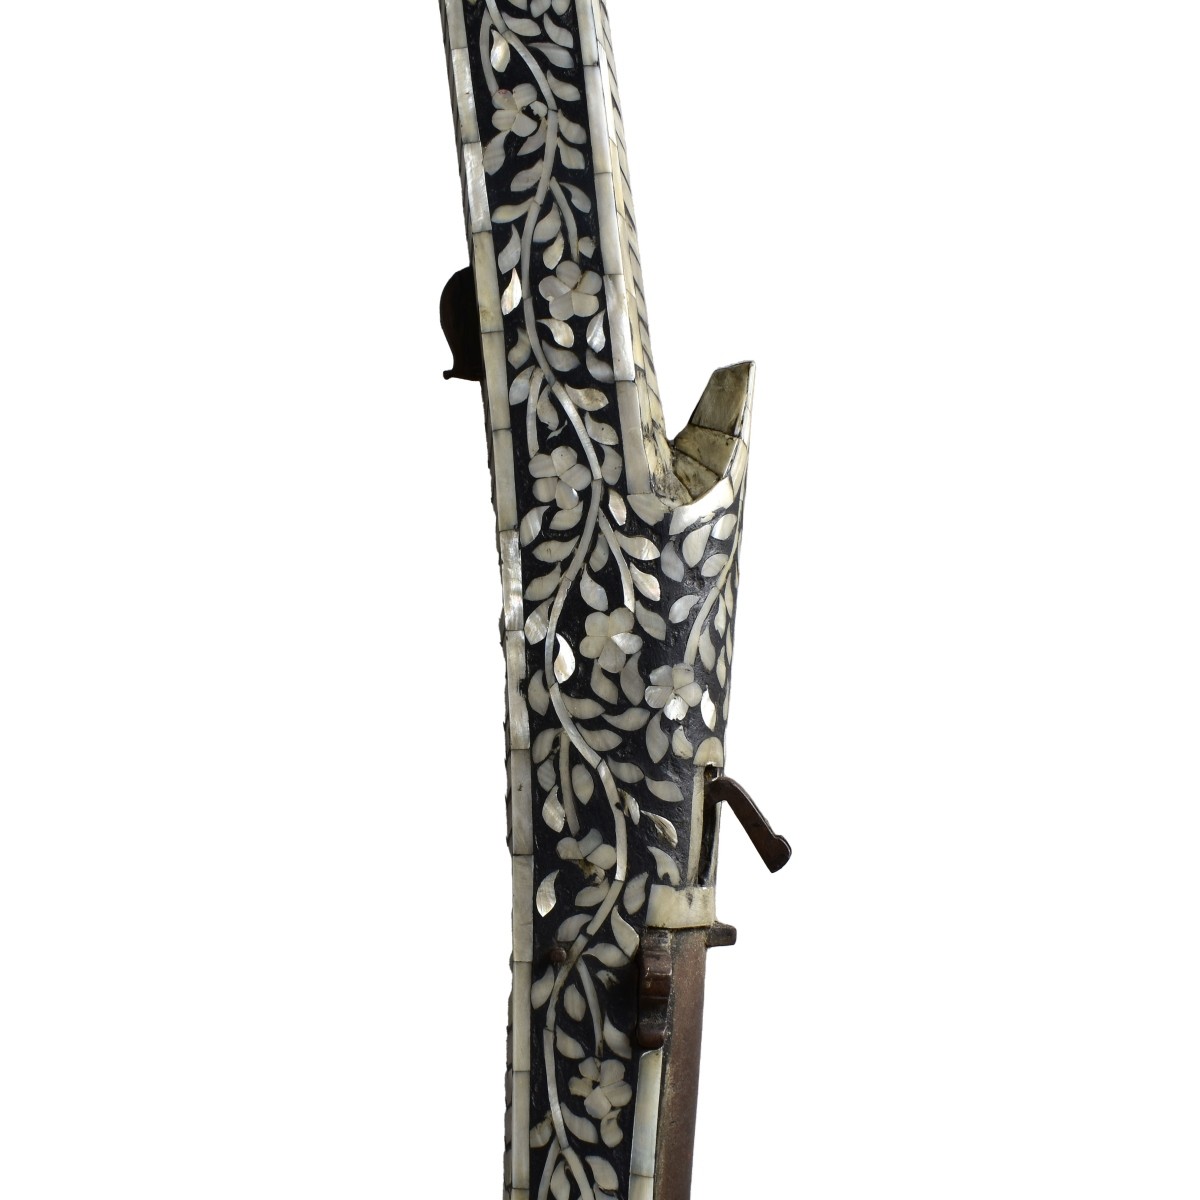 Antique Indian Mughal Match Lock Rifle